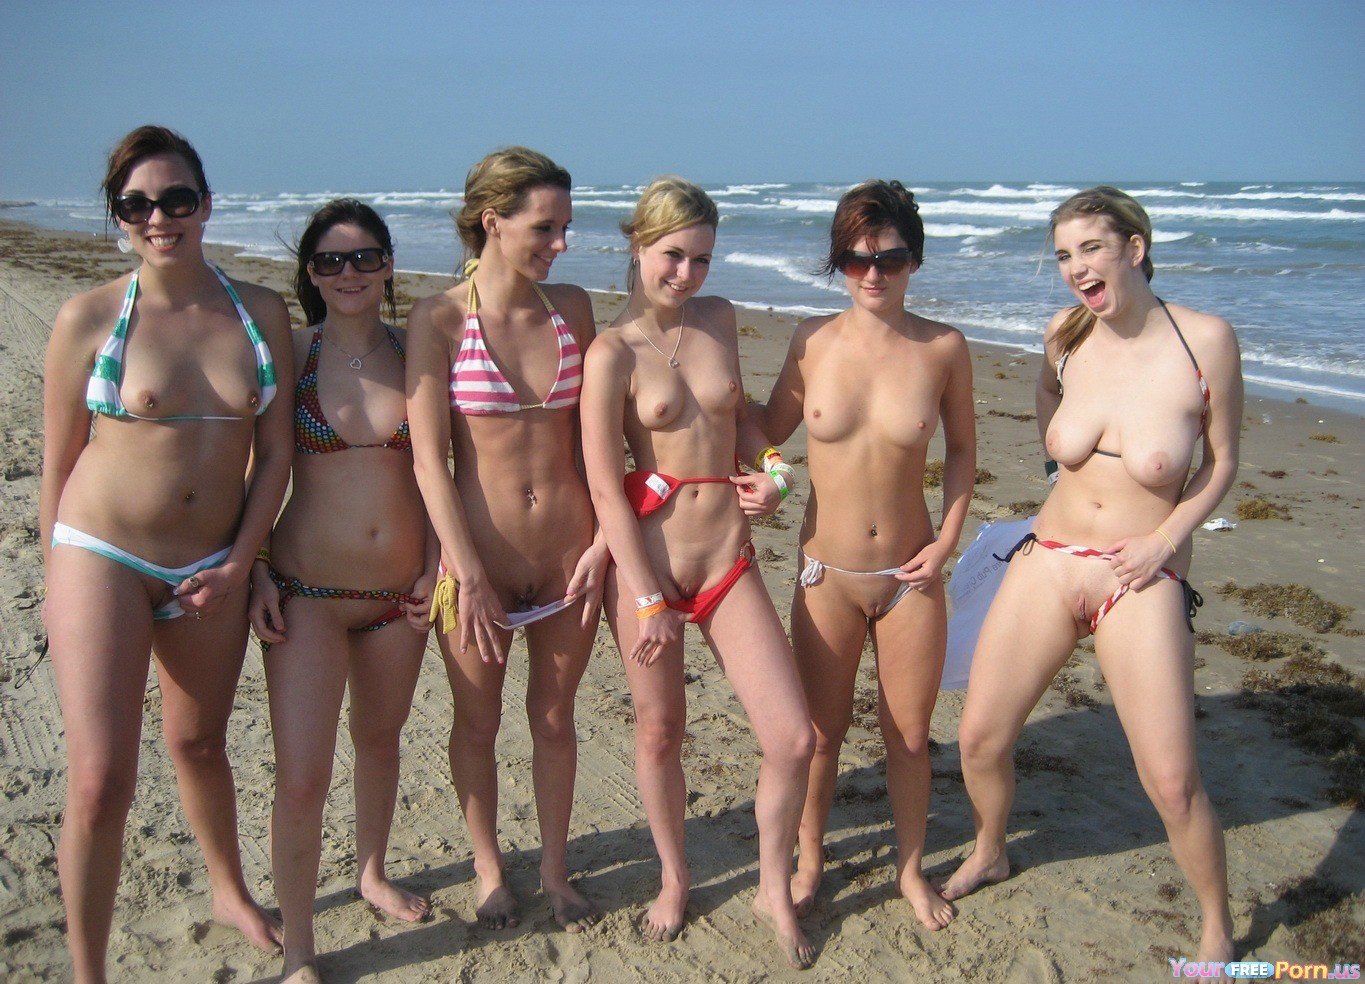 Iowa girls topless porno sisters